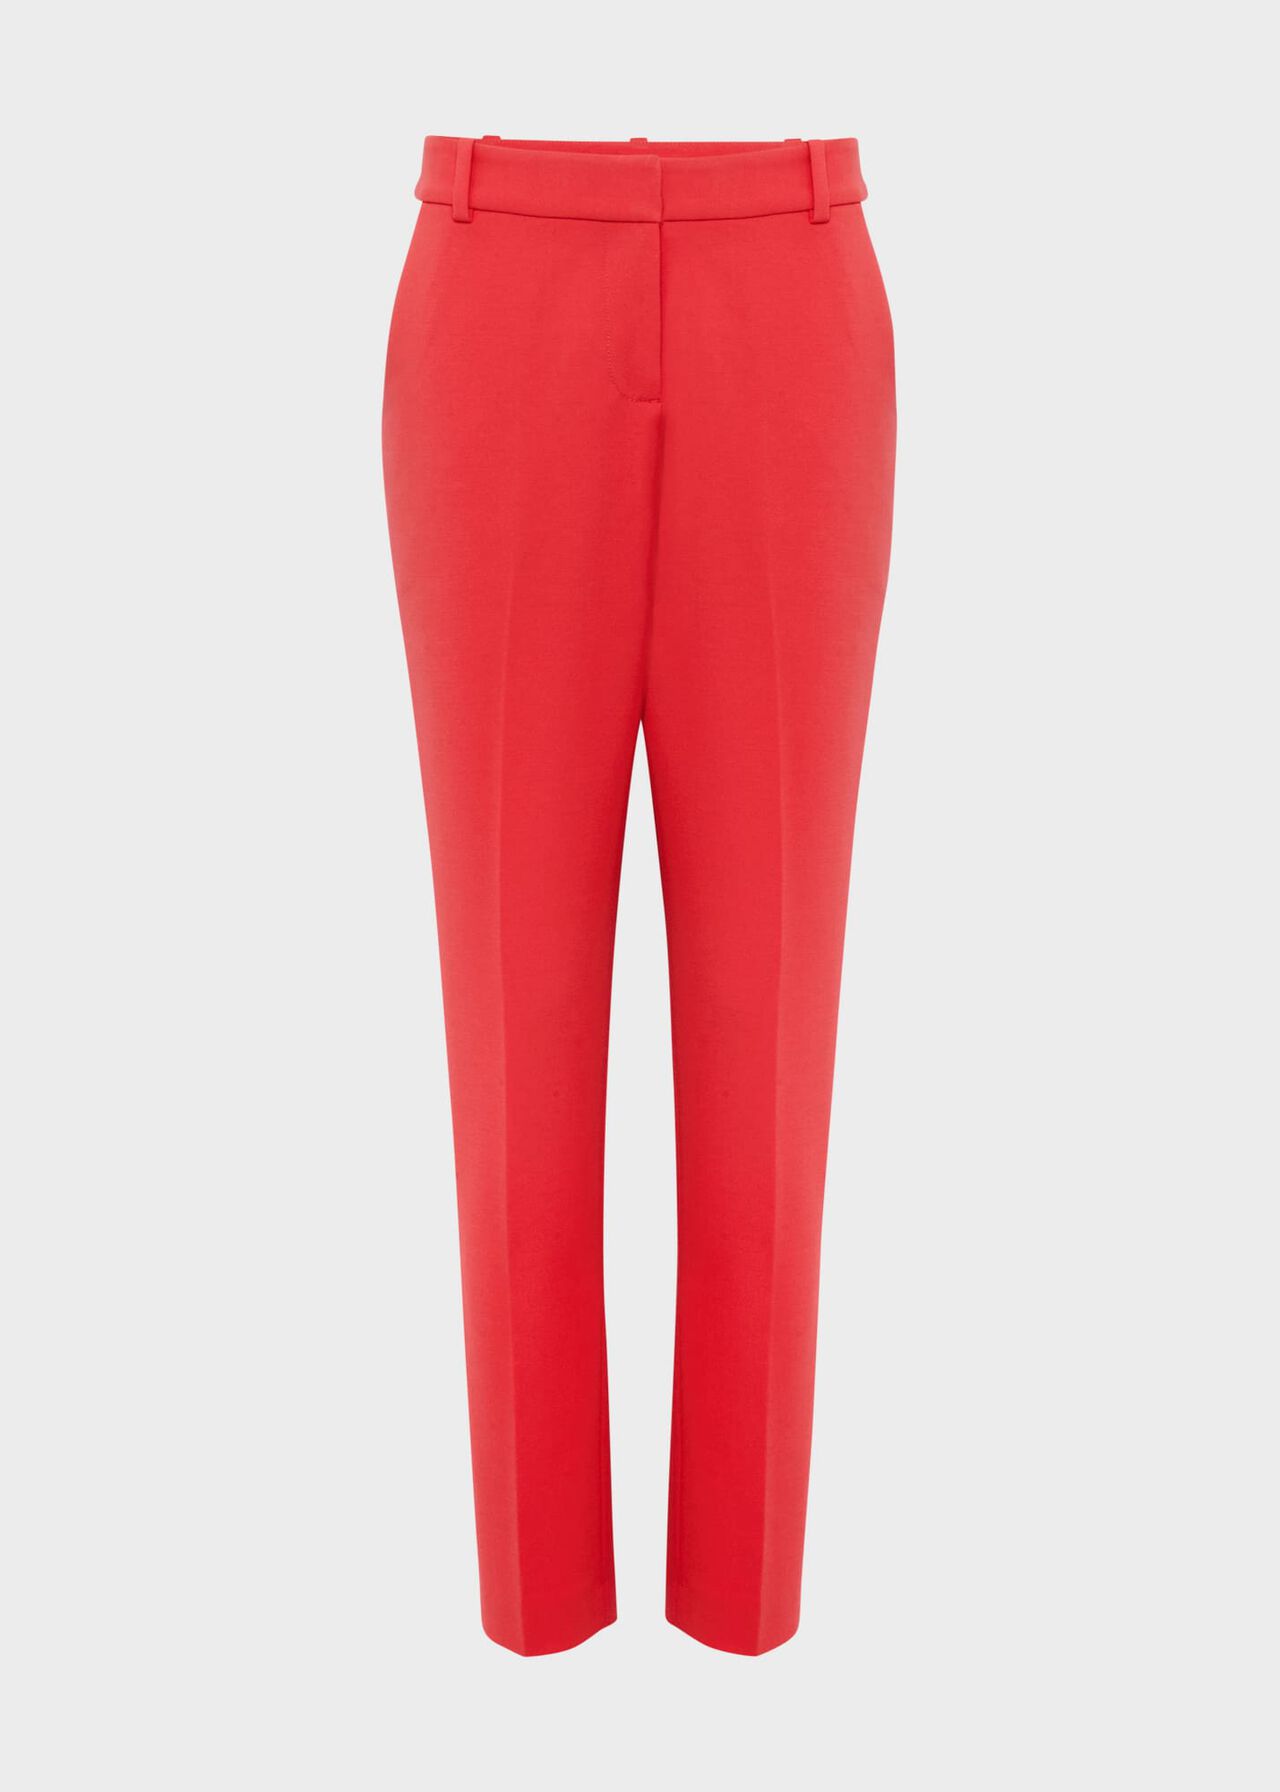 Petite Suki Trousers, Flame Red, hi-res